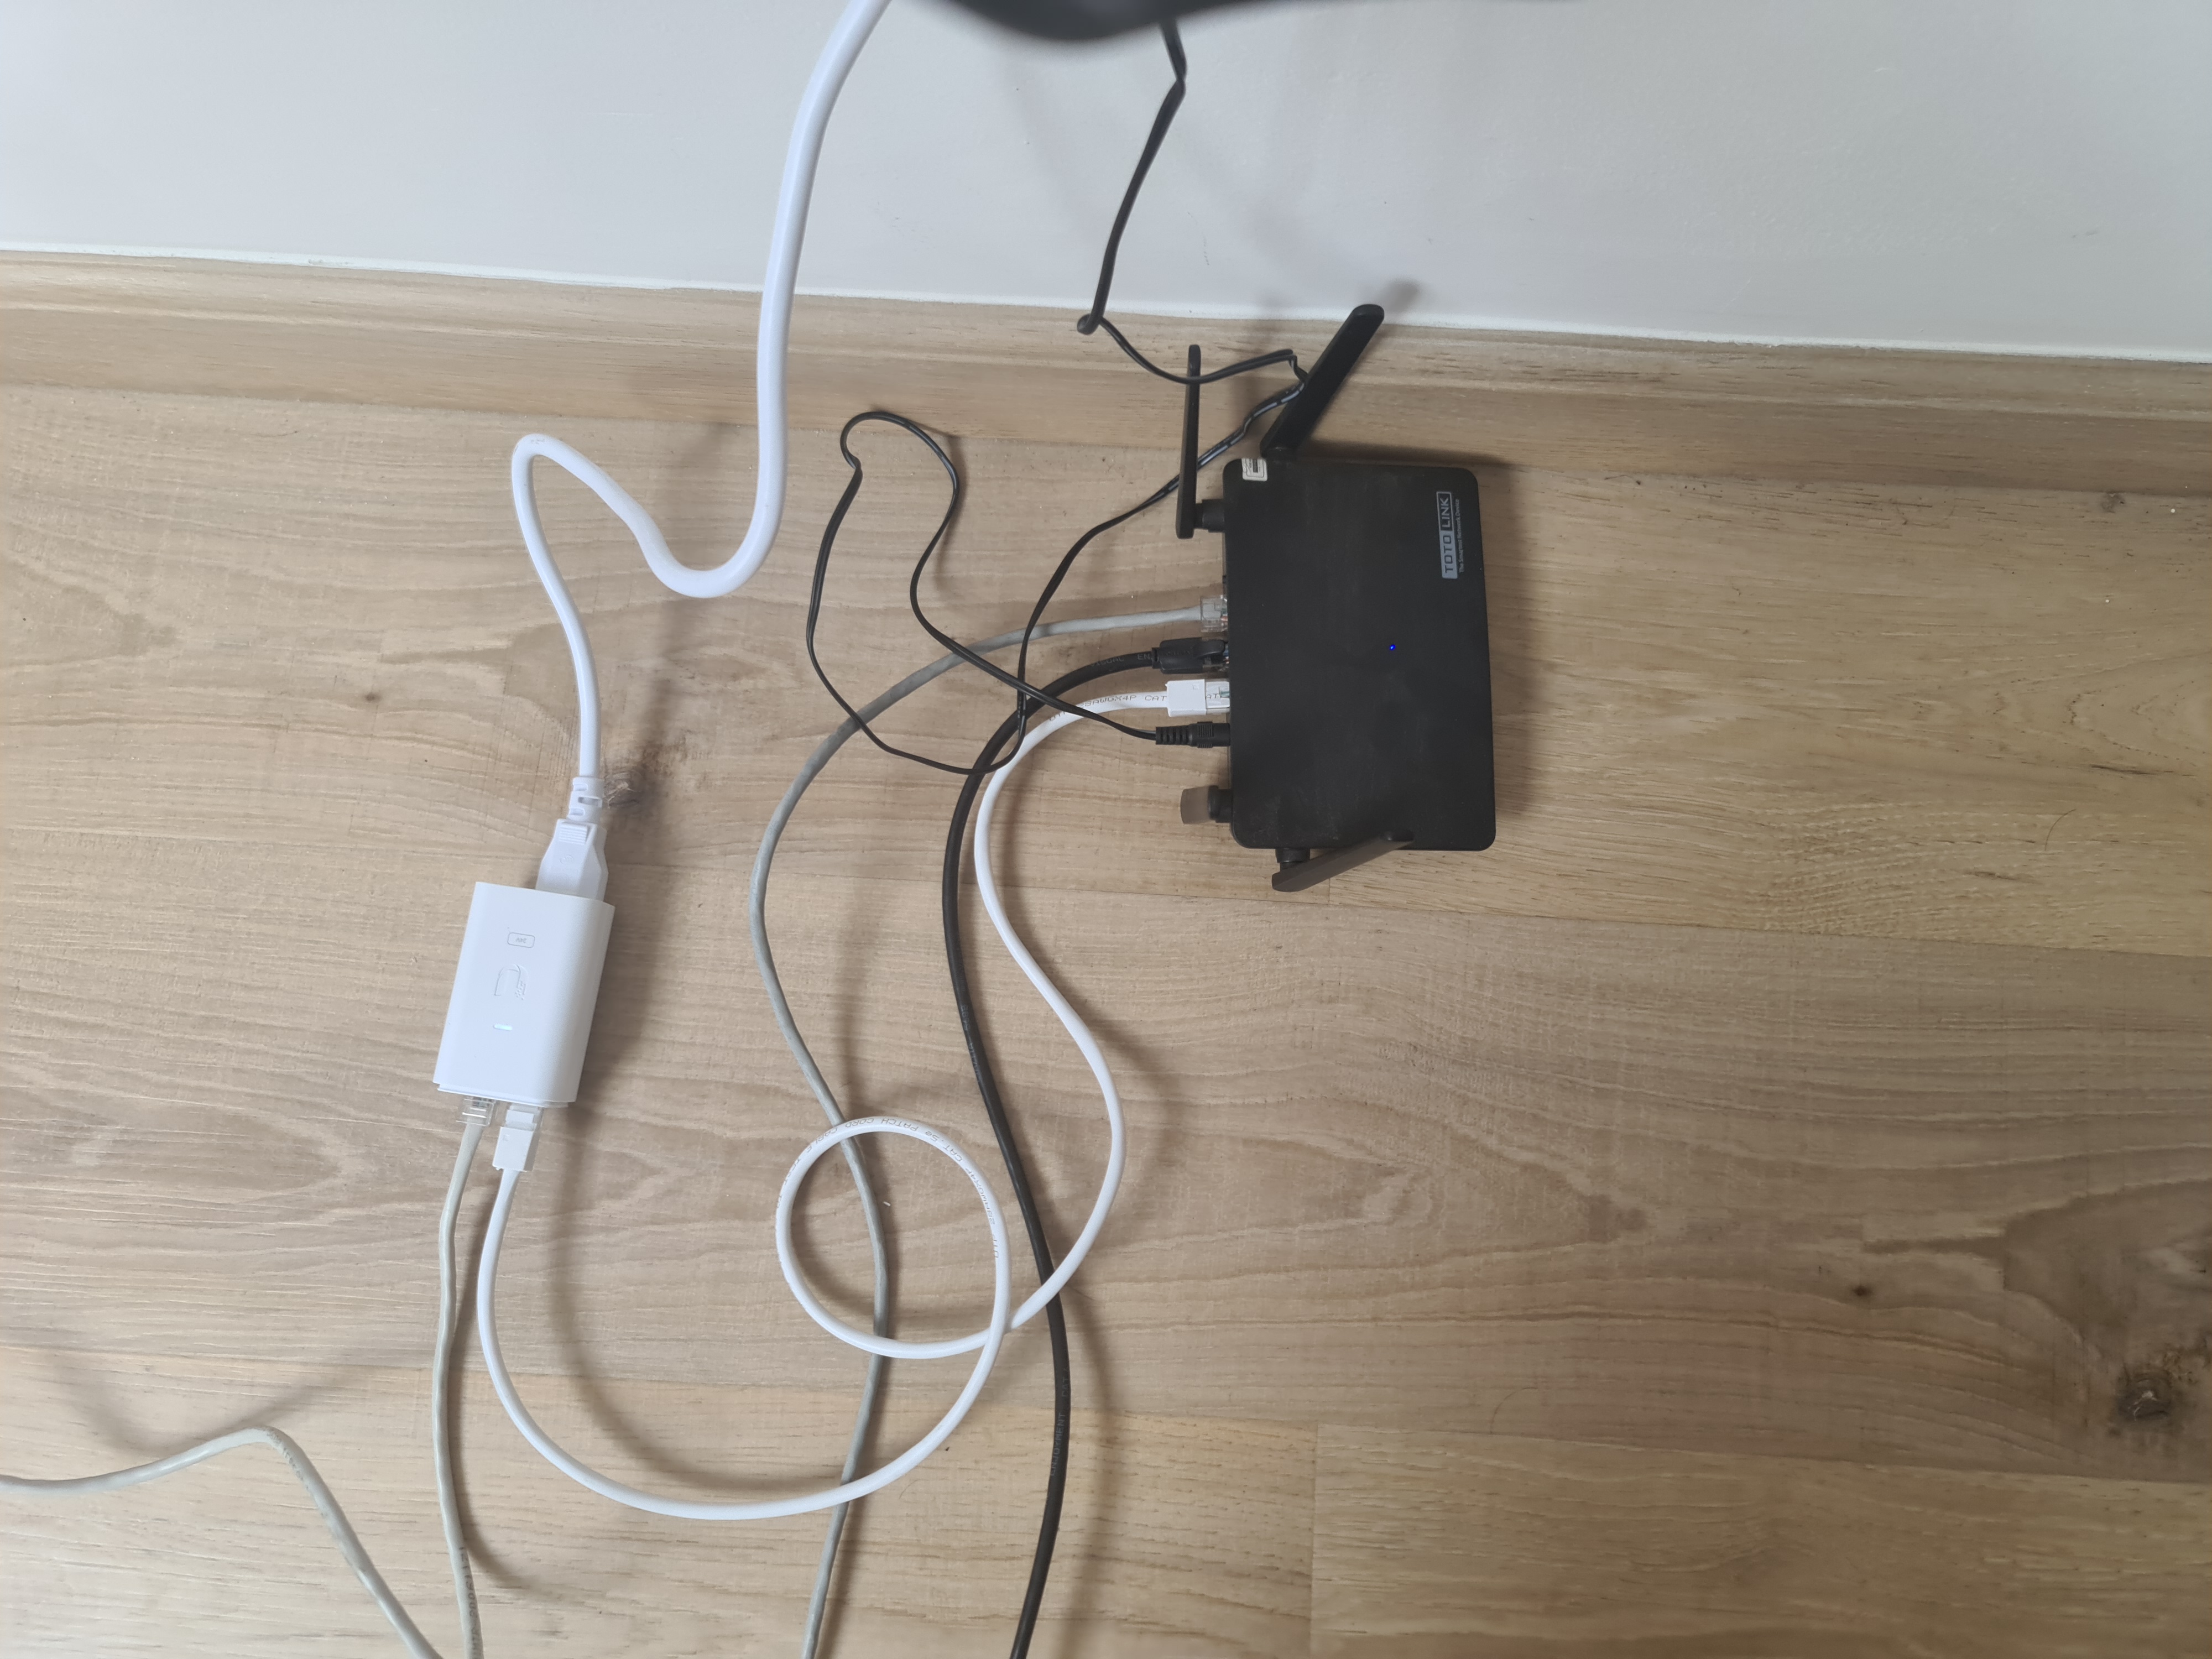 modem dan kabel kabelnya